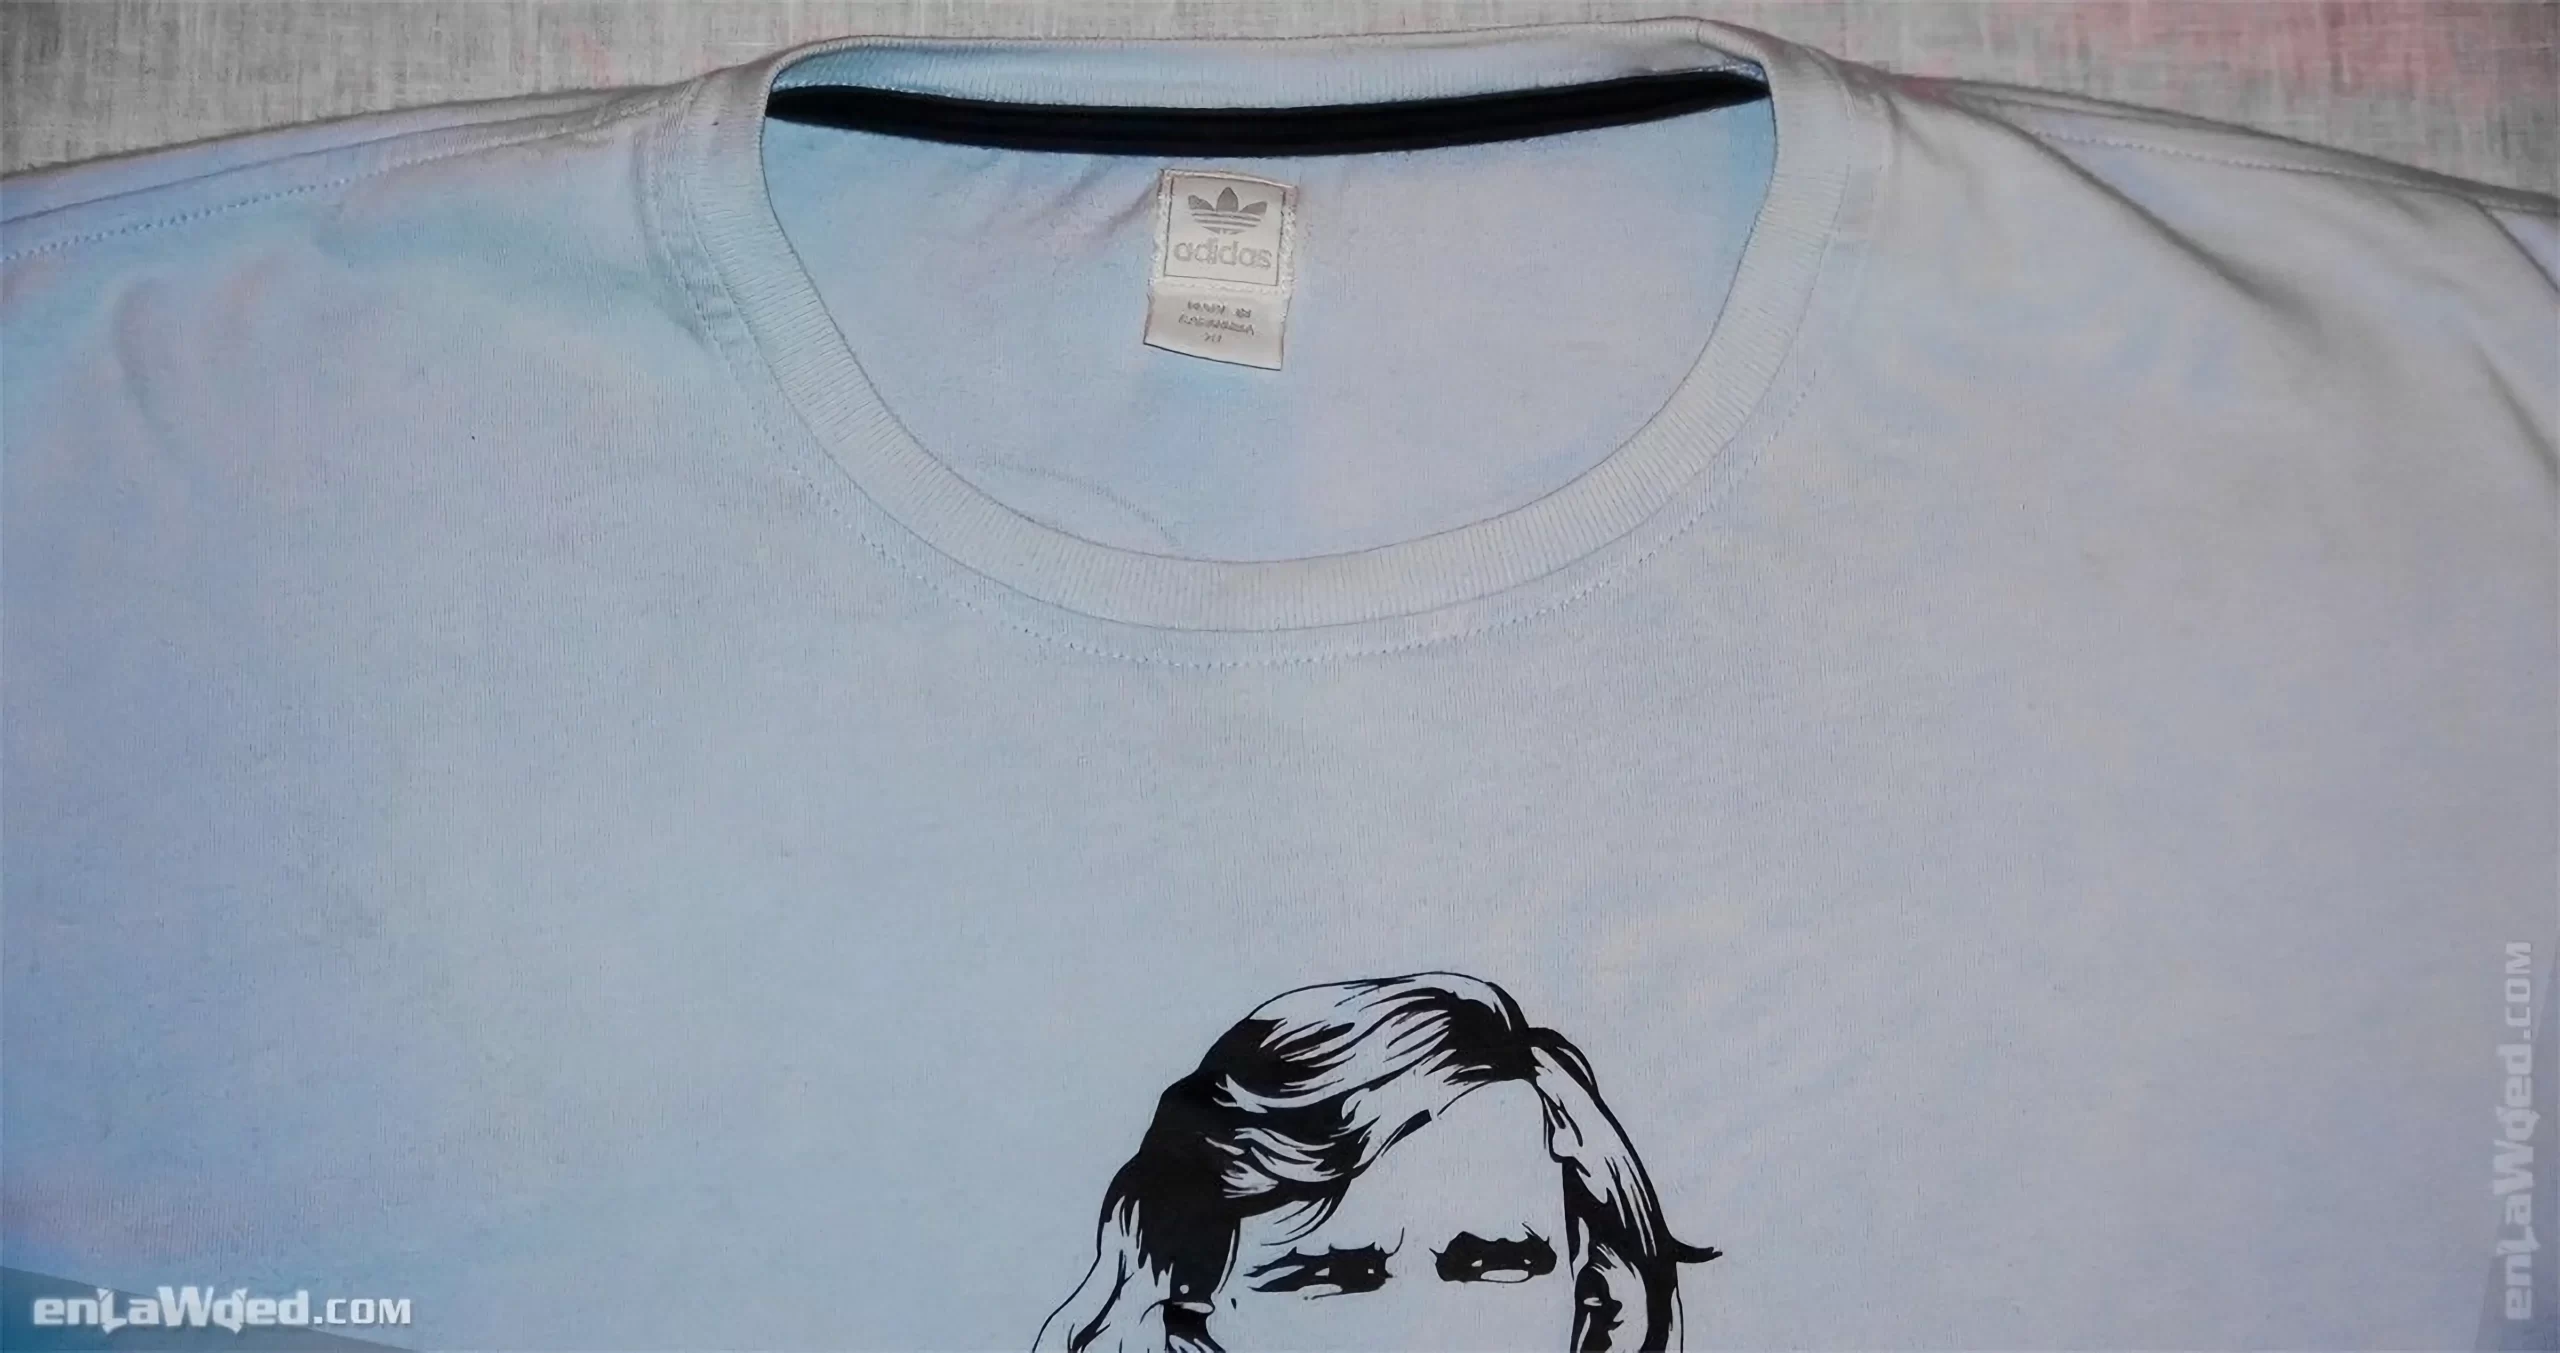 Men’s 2006 James Hunt Player’s Club T-Shirt by Adidas: Frisky (EnLawded.com file #lmchk90325ip2y125030kg9st)